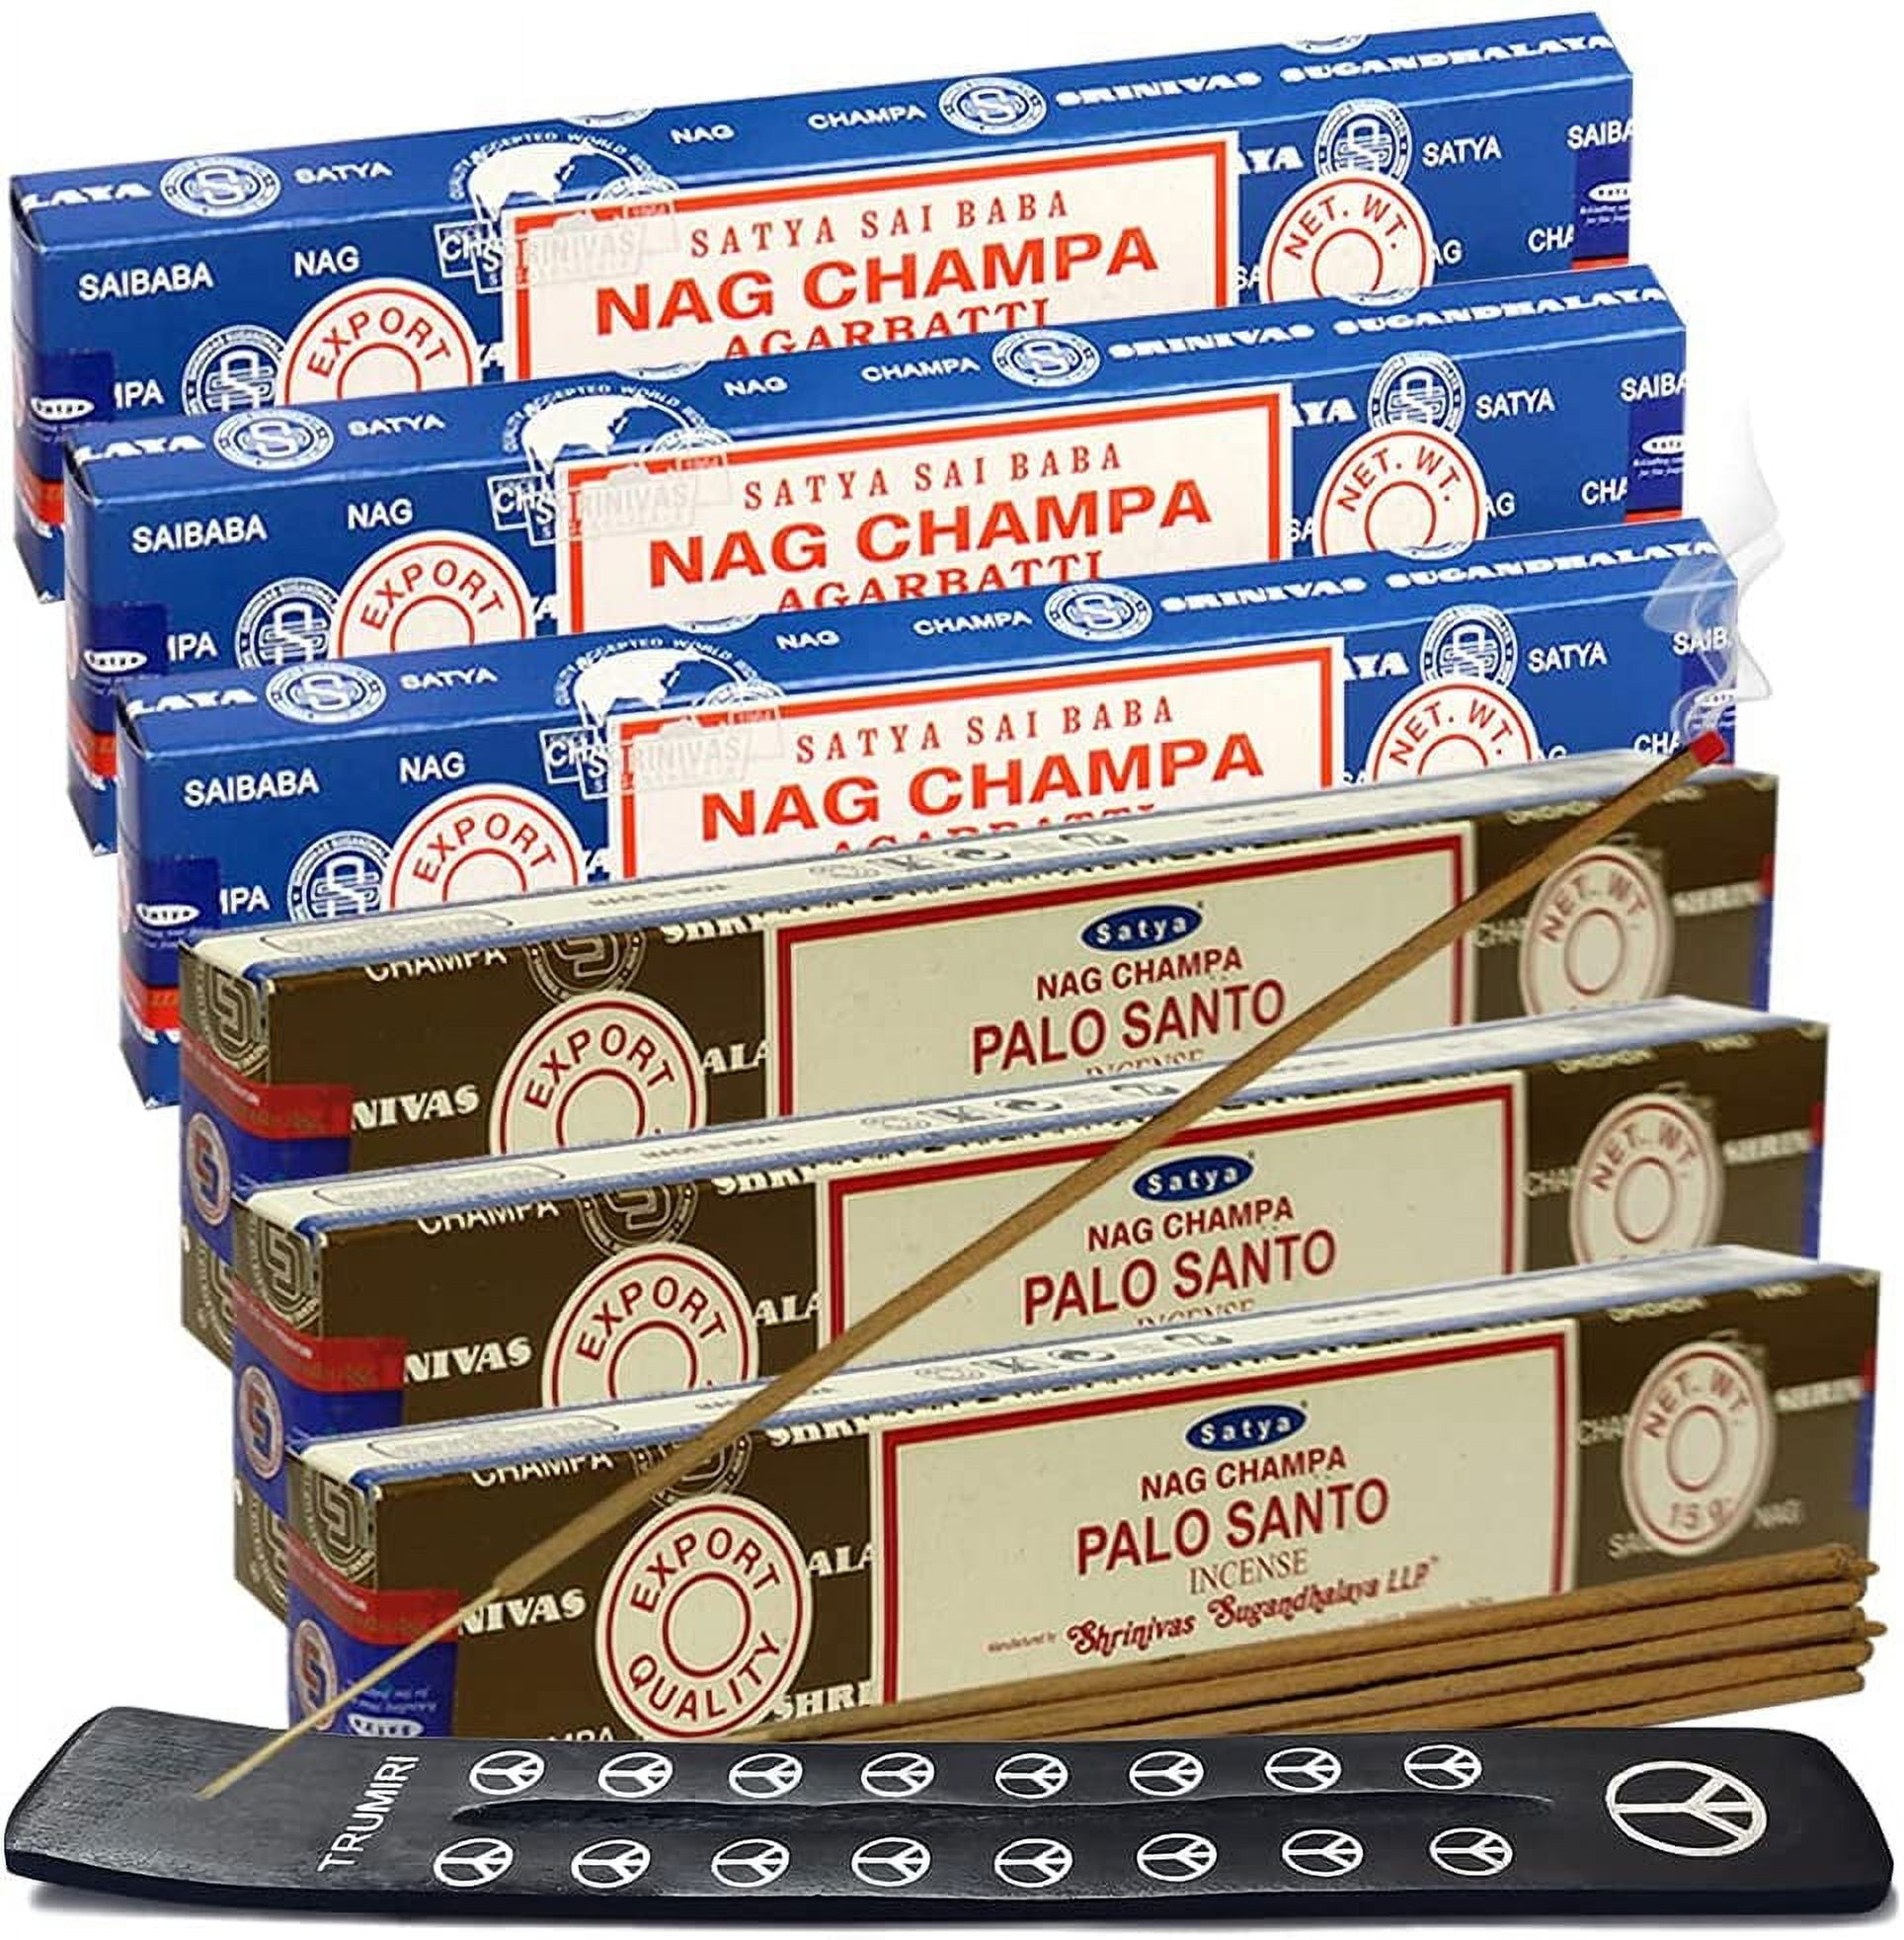 3 Packs Origional Satya SAI Baba Nag Champa Incense Sticks Joss Insence - Insense 15g Box Nagchampa Agarbatti